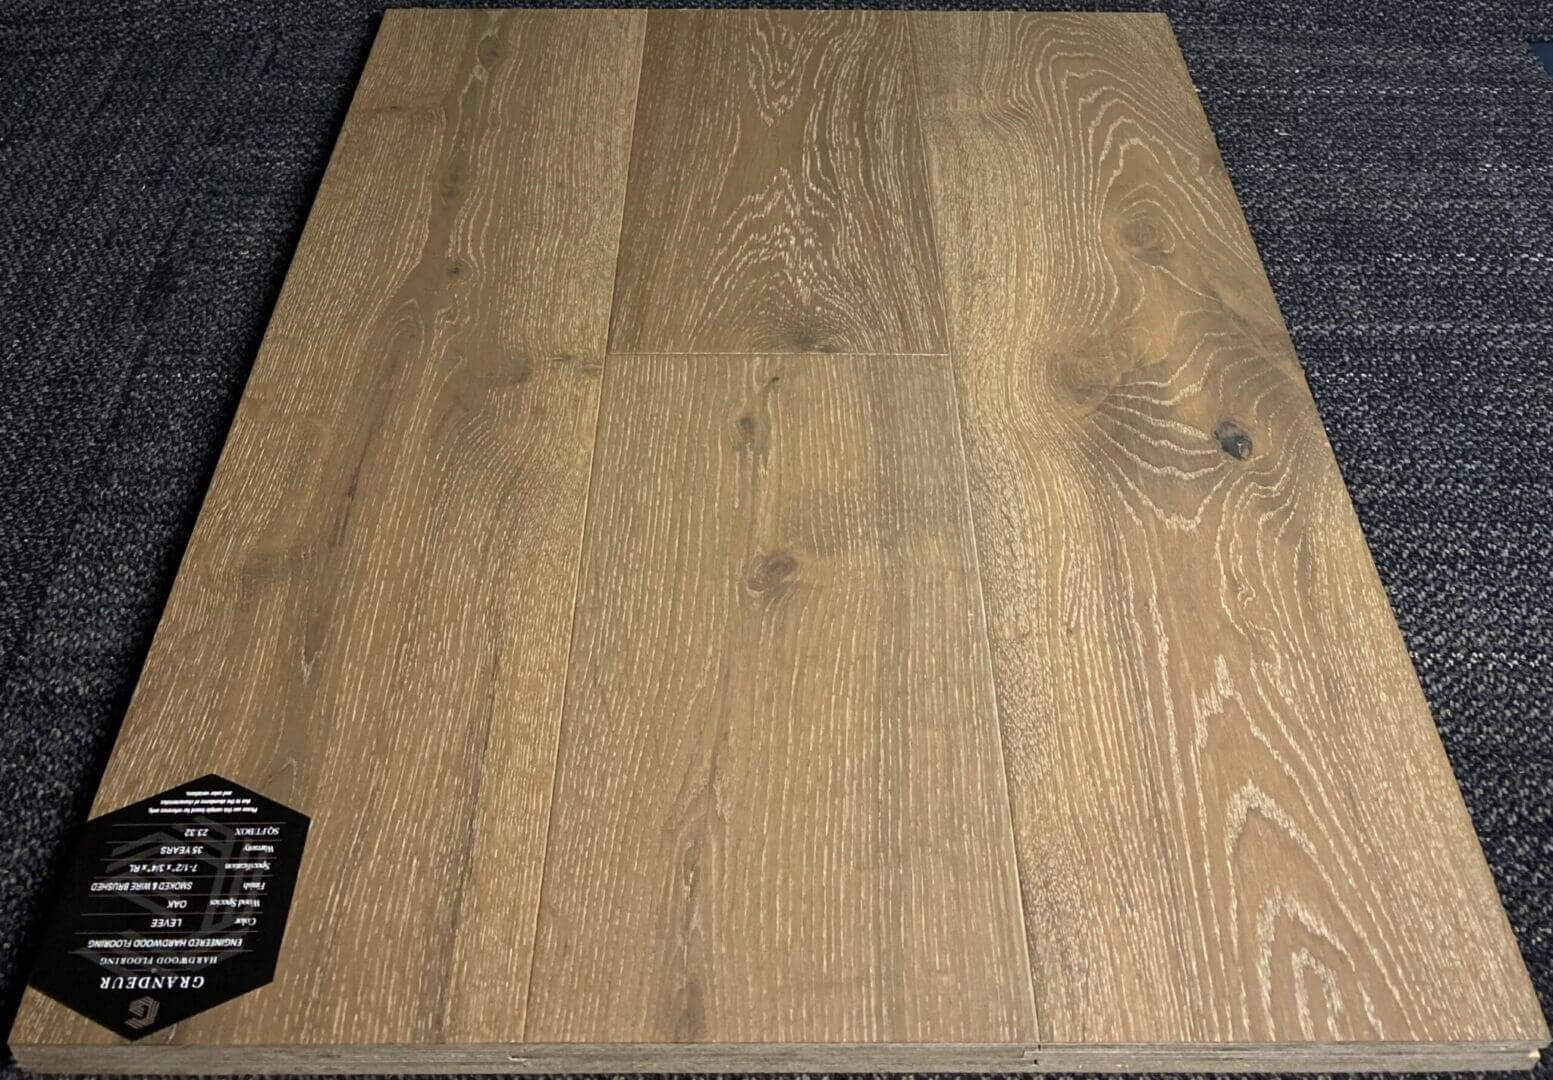 Levee Grandeur Oak Engineered Hardwood Flooring Mississauga Flooring Experts Hardwood Laminate Vinyl Carpet Tiles